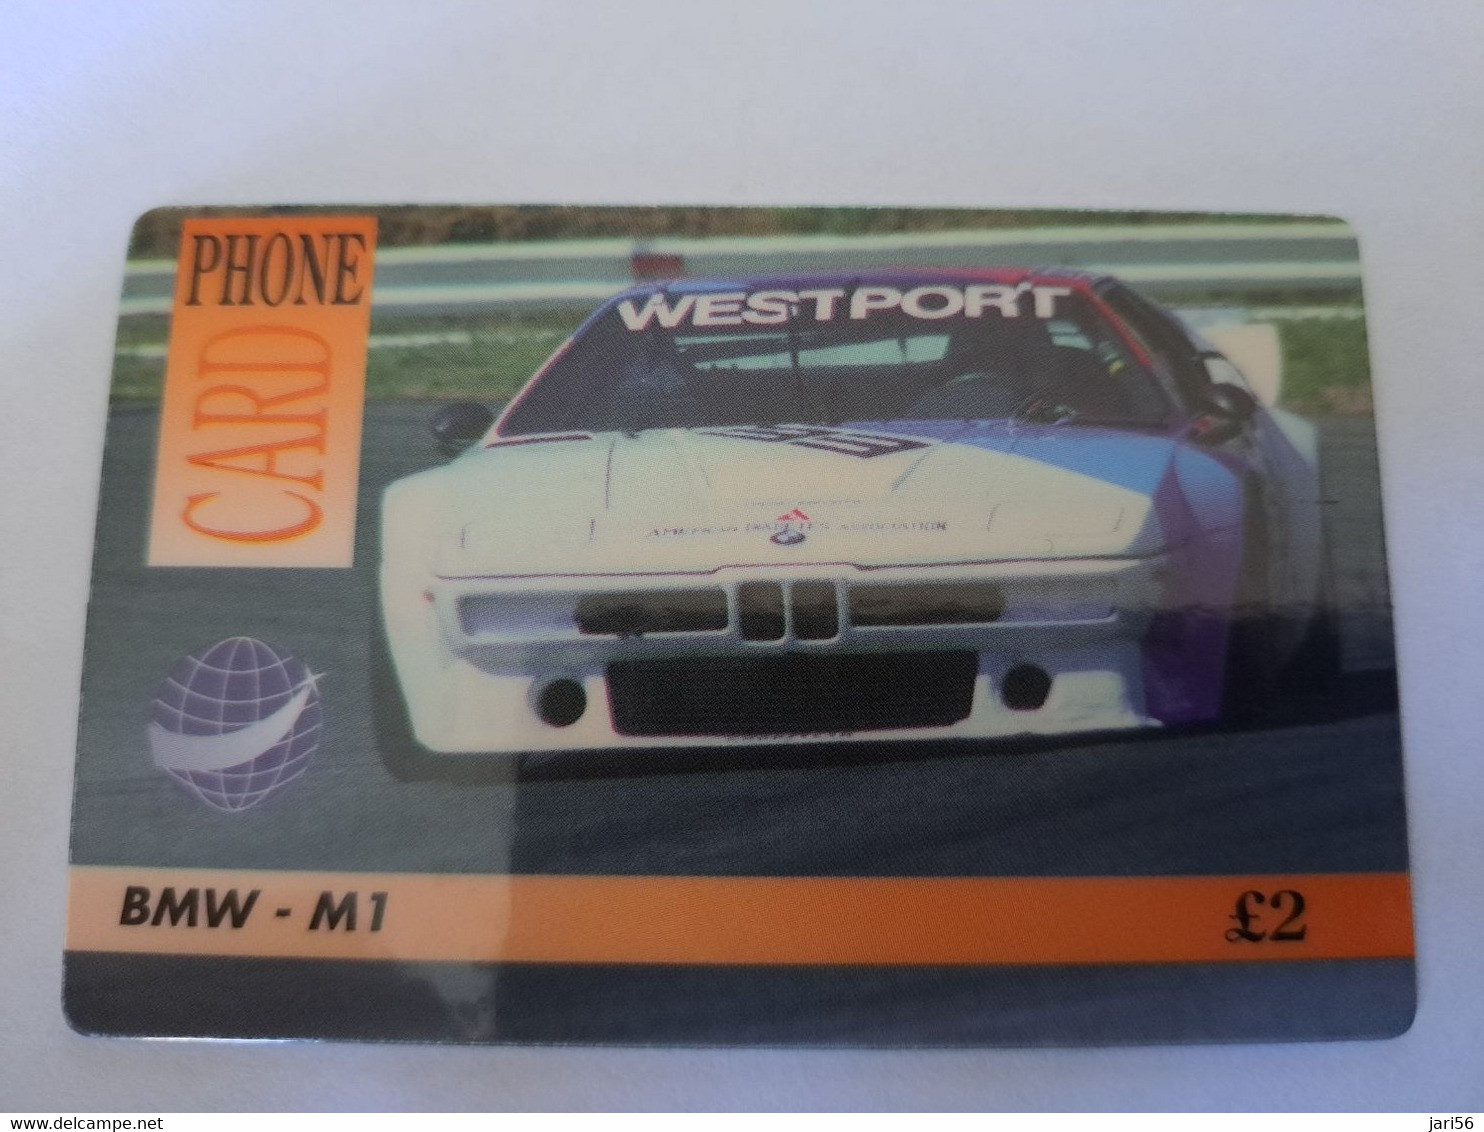 GREAT BRITAIN   2 POUND  /  BMW - M1  AUTO/CAR /RACE  /    DIT PHONECARD    PREPAID CARD      **12126** - Collezioni